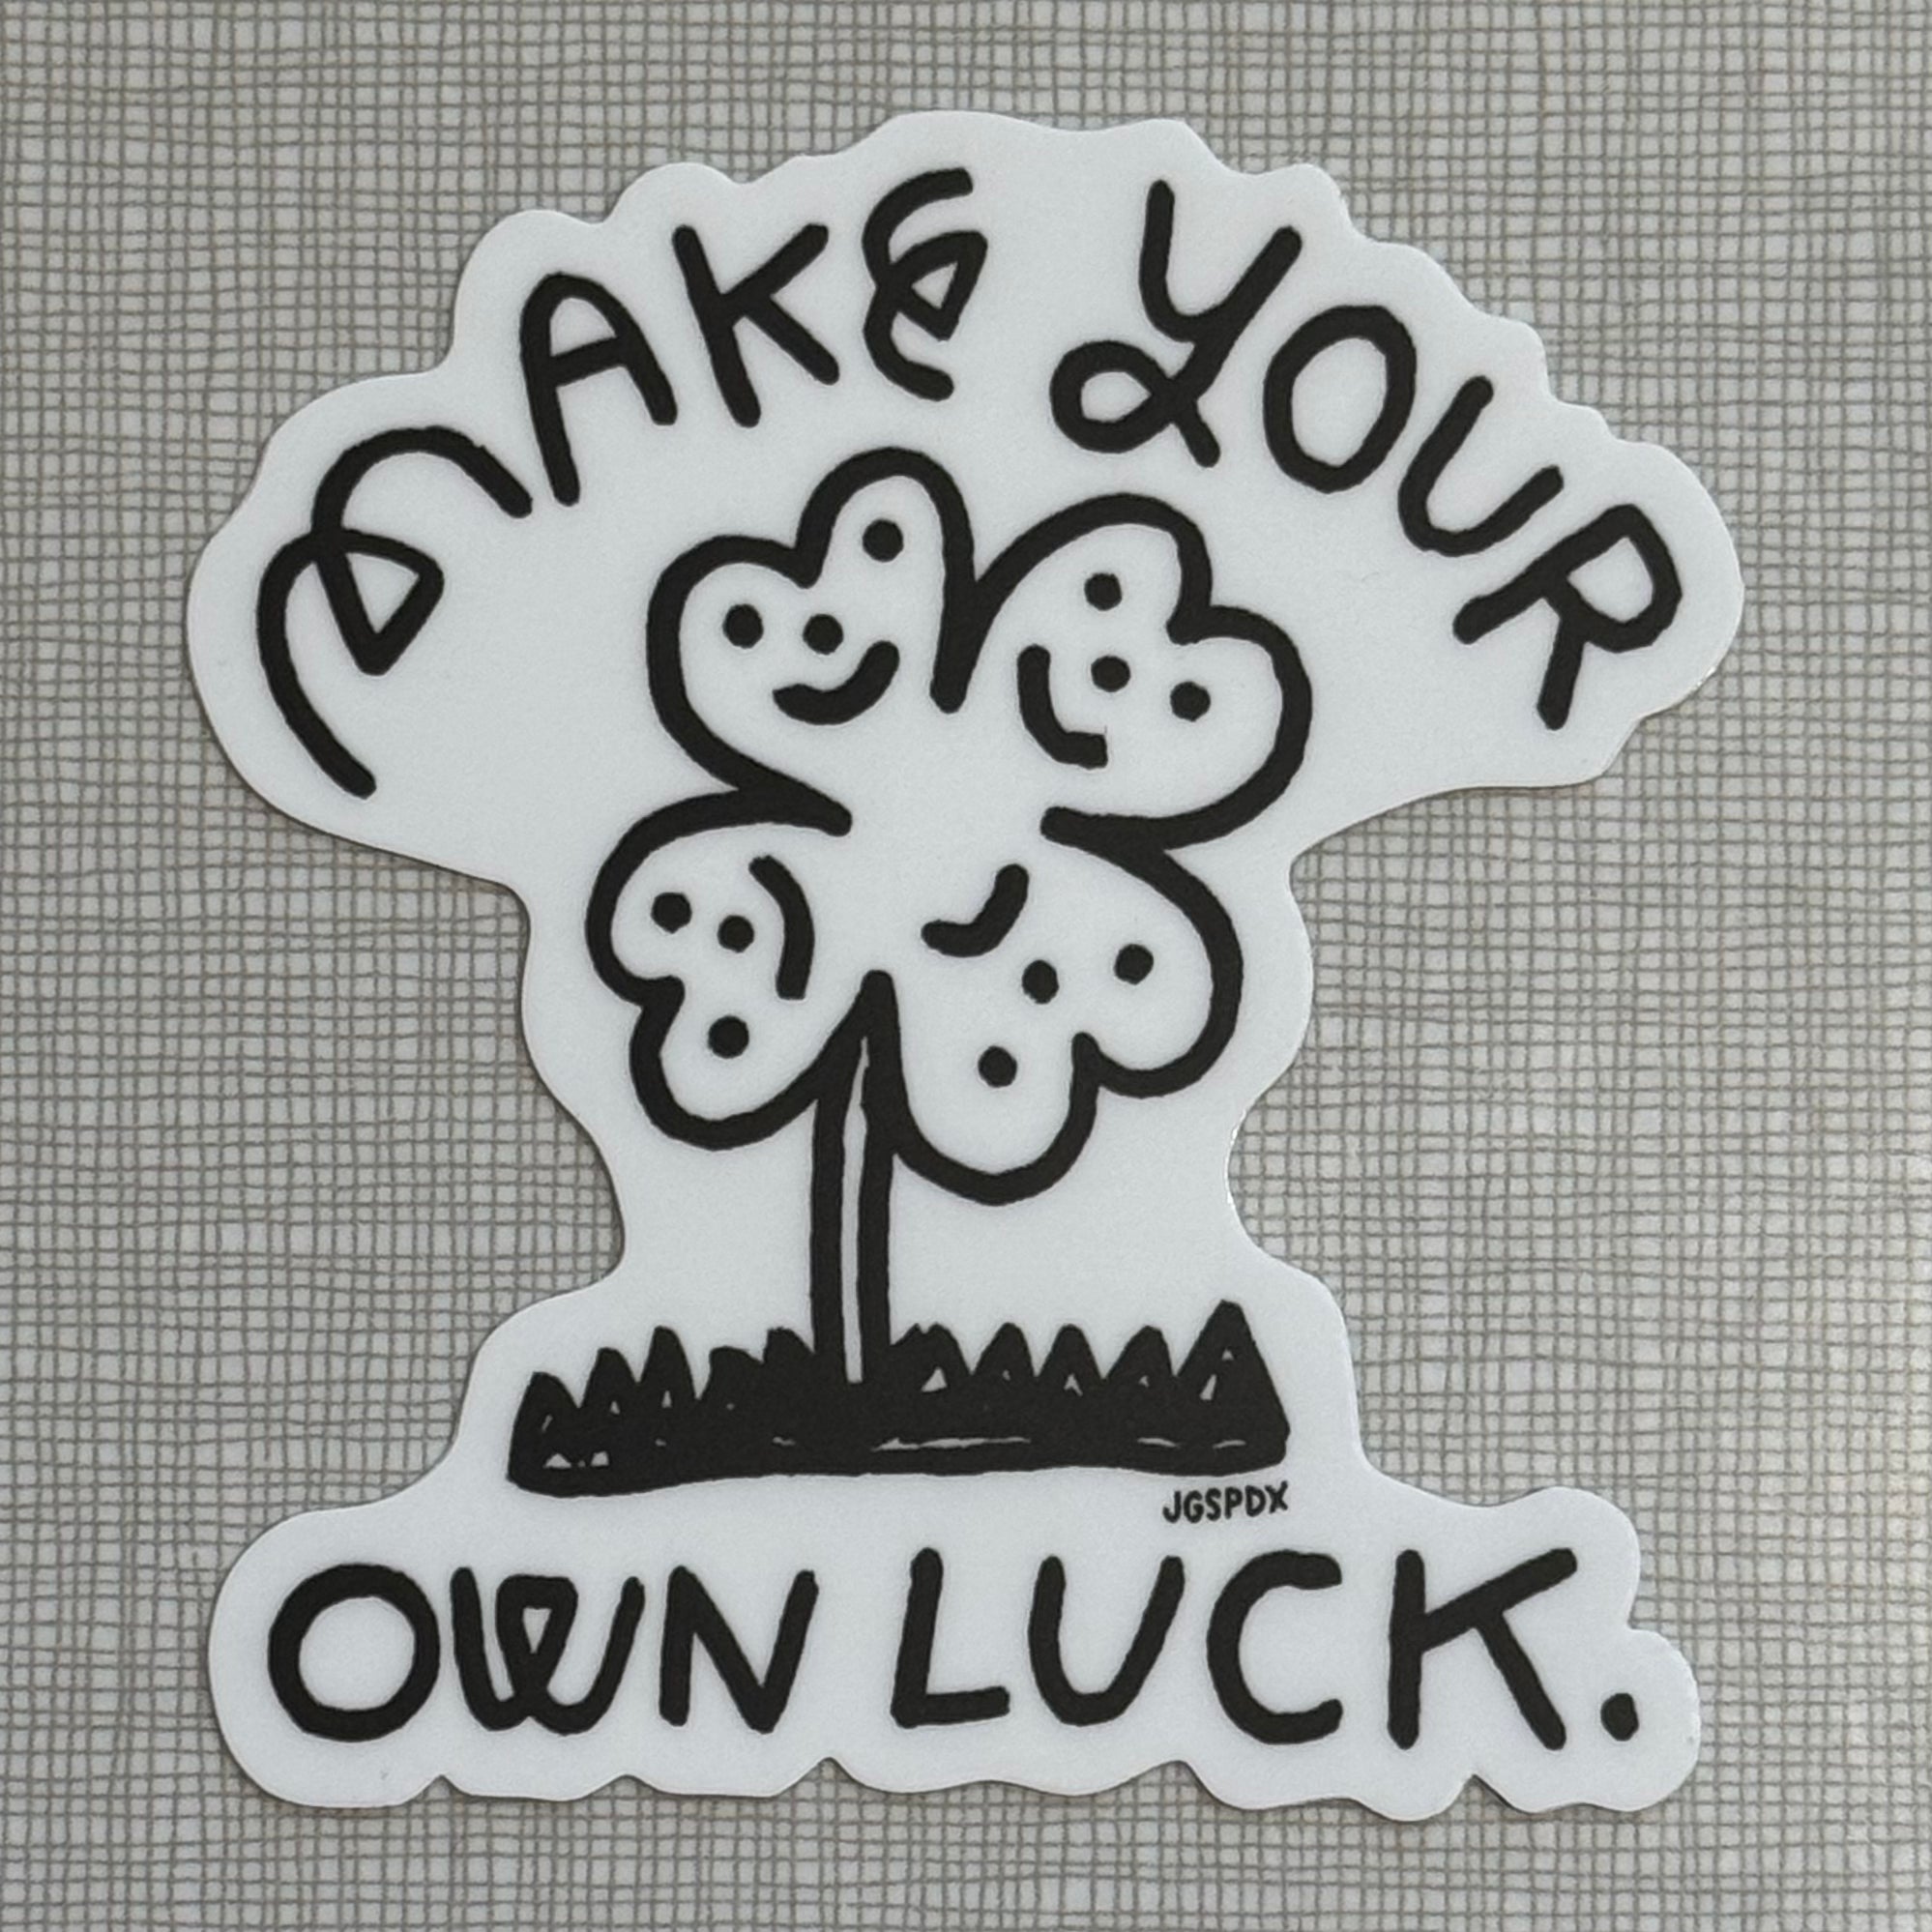 Make Your Own Luck 3” Vinyl Sticker